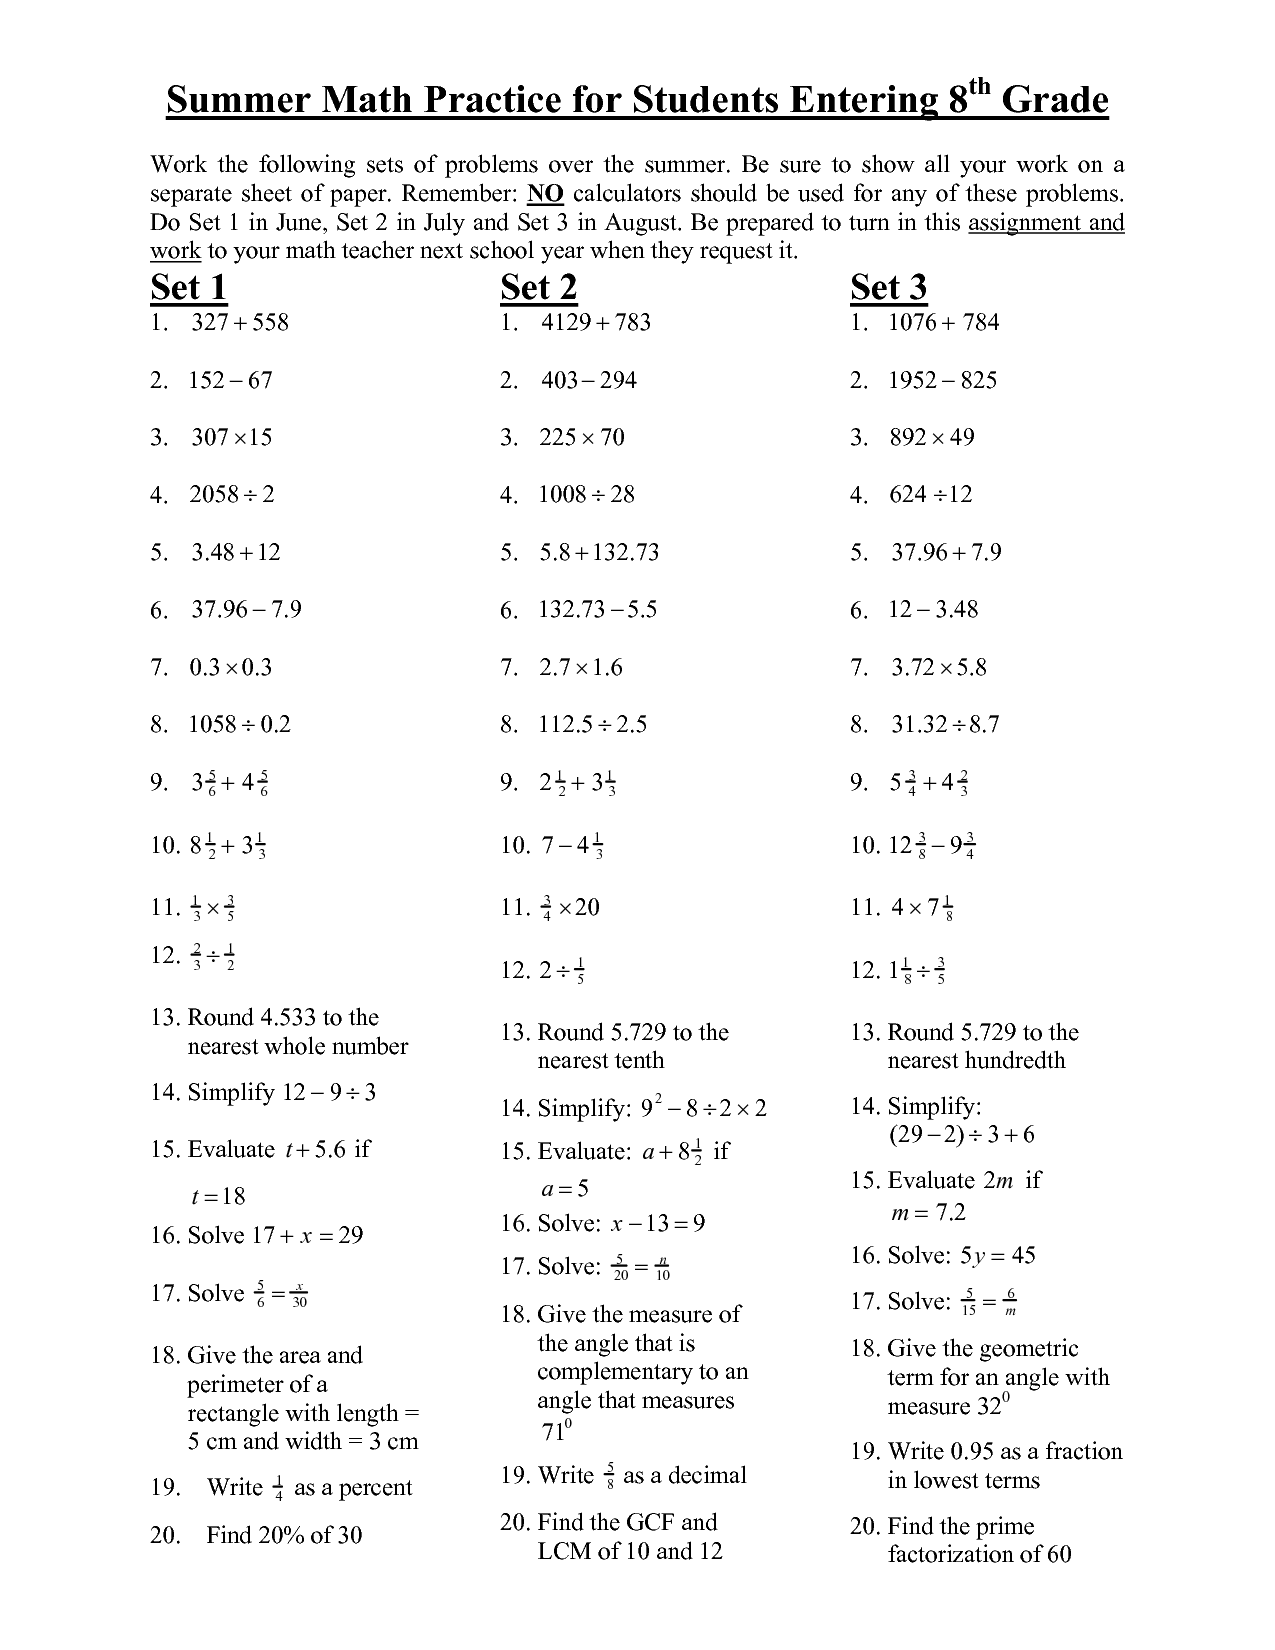 8th Grade Math Practice Image